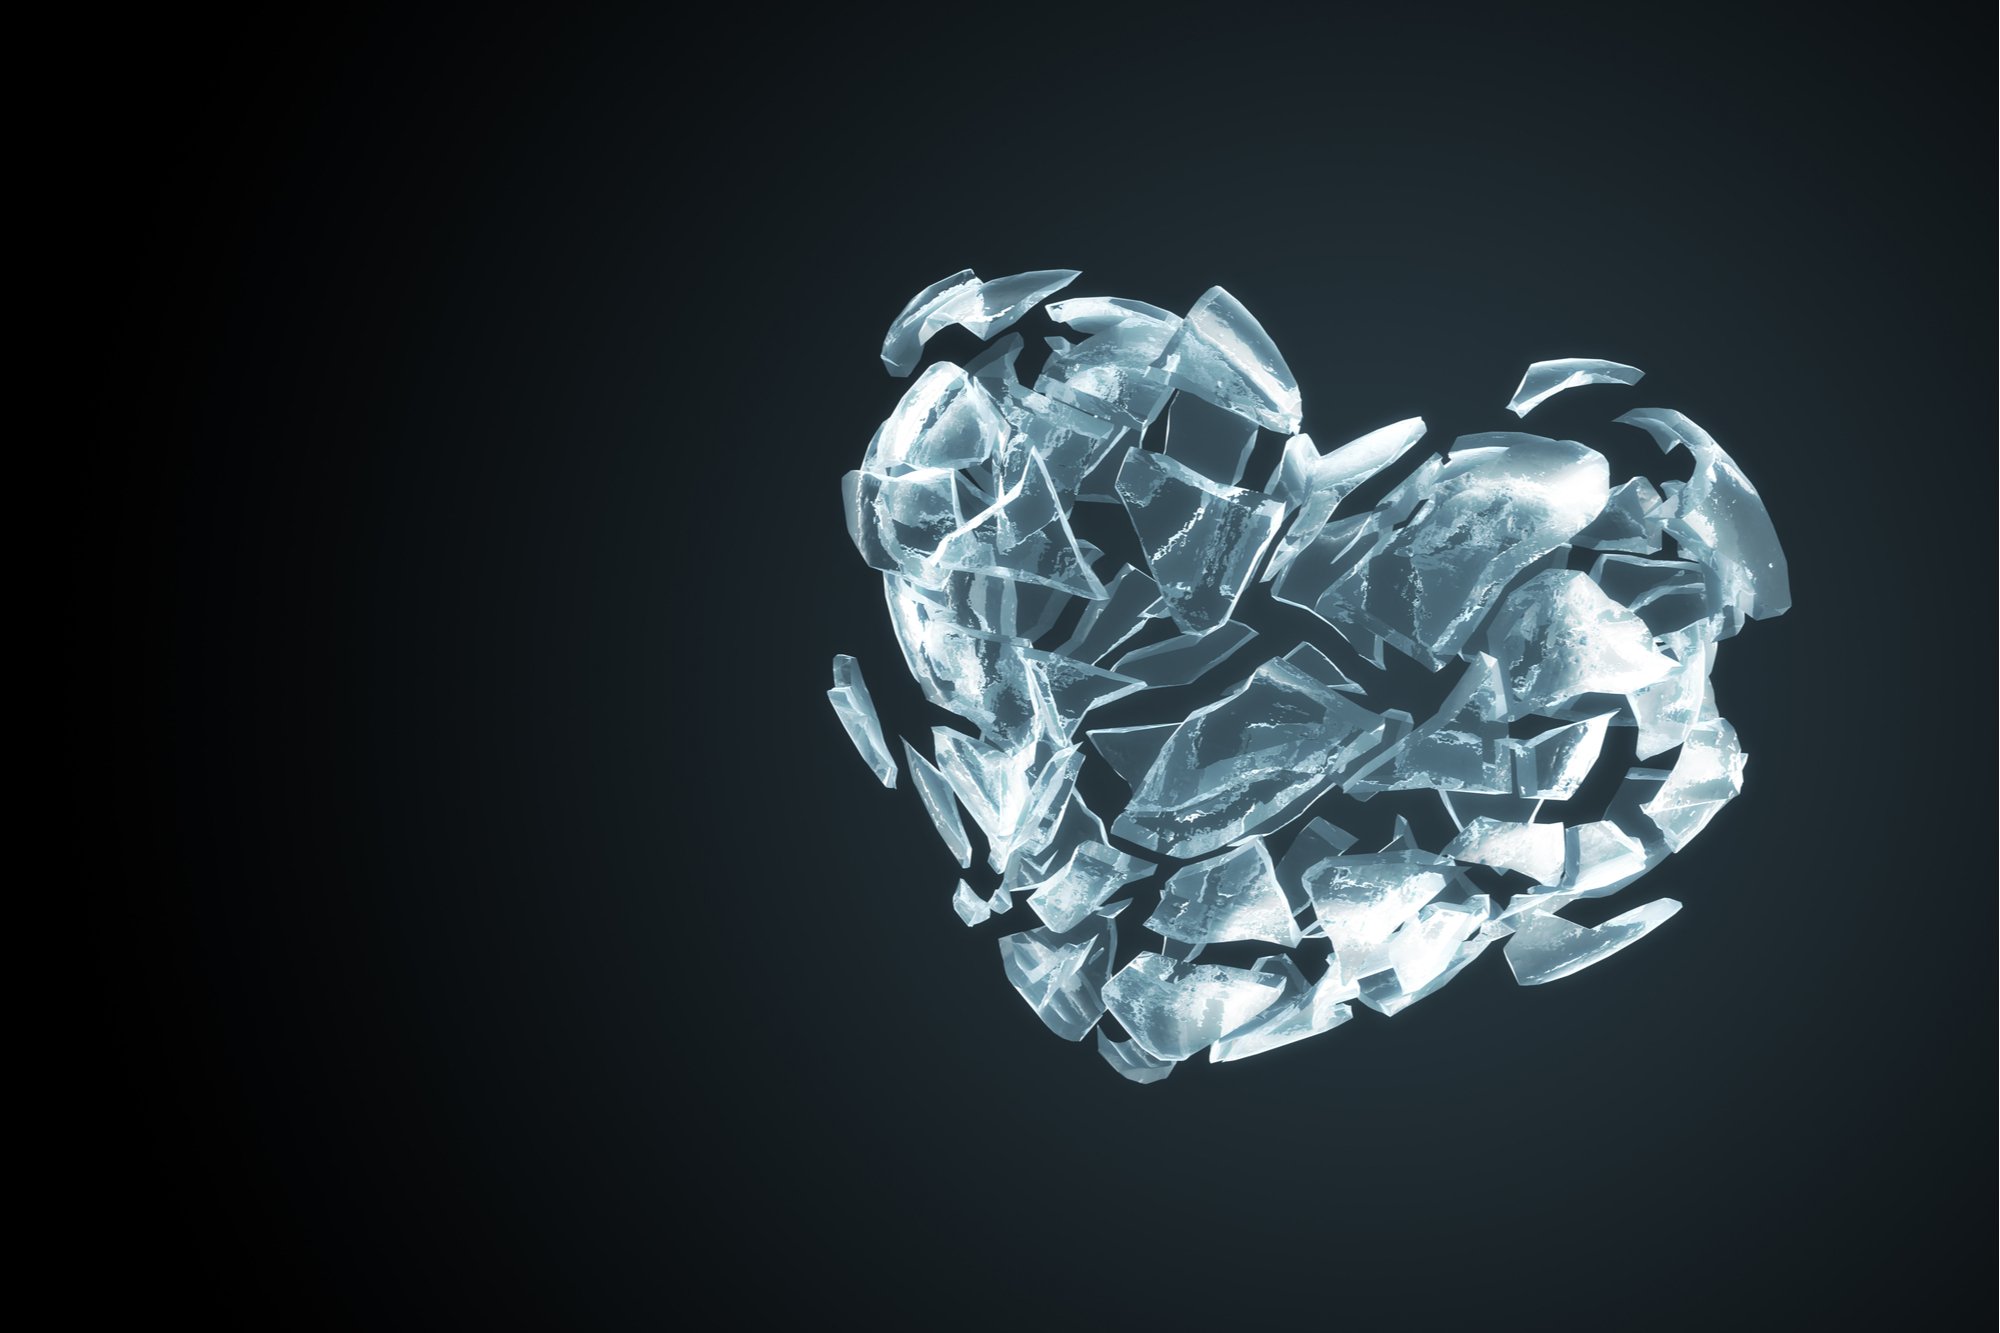 Сломай мой лед. Разбитое Ледяное сердце. Разбитое сердце стекло. Разбитое стеклянное сердце. Сердце во льду.